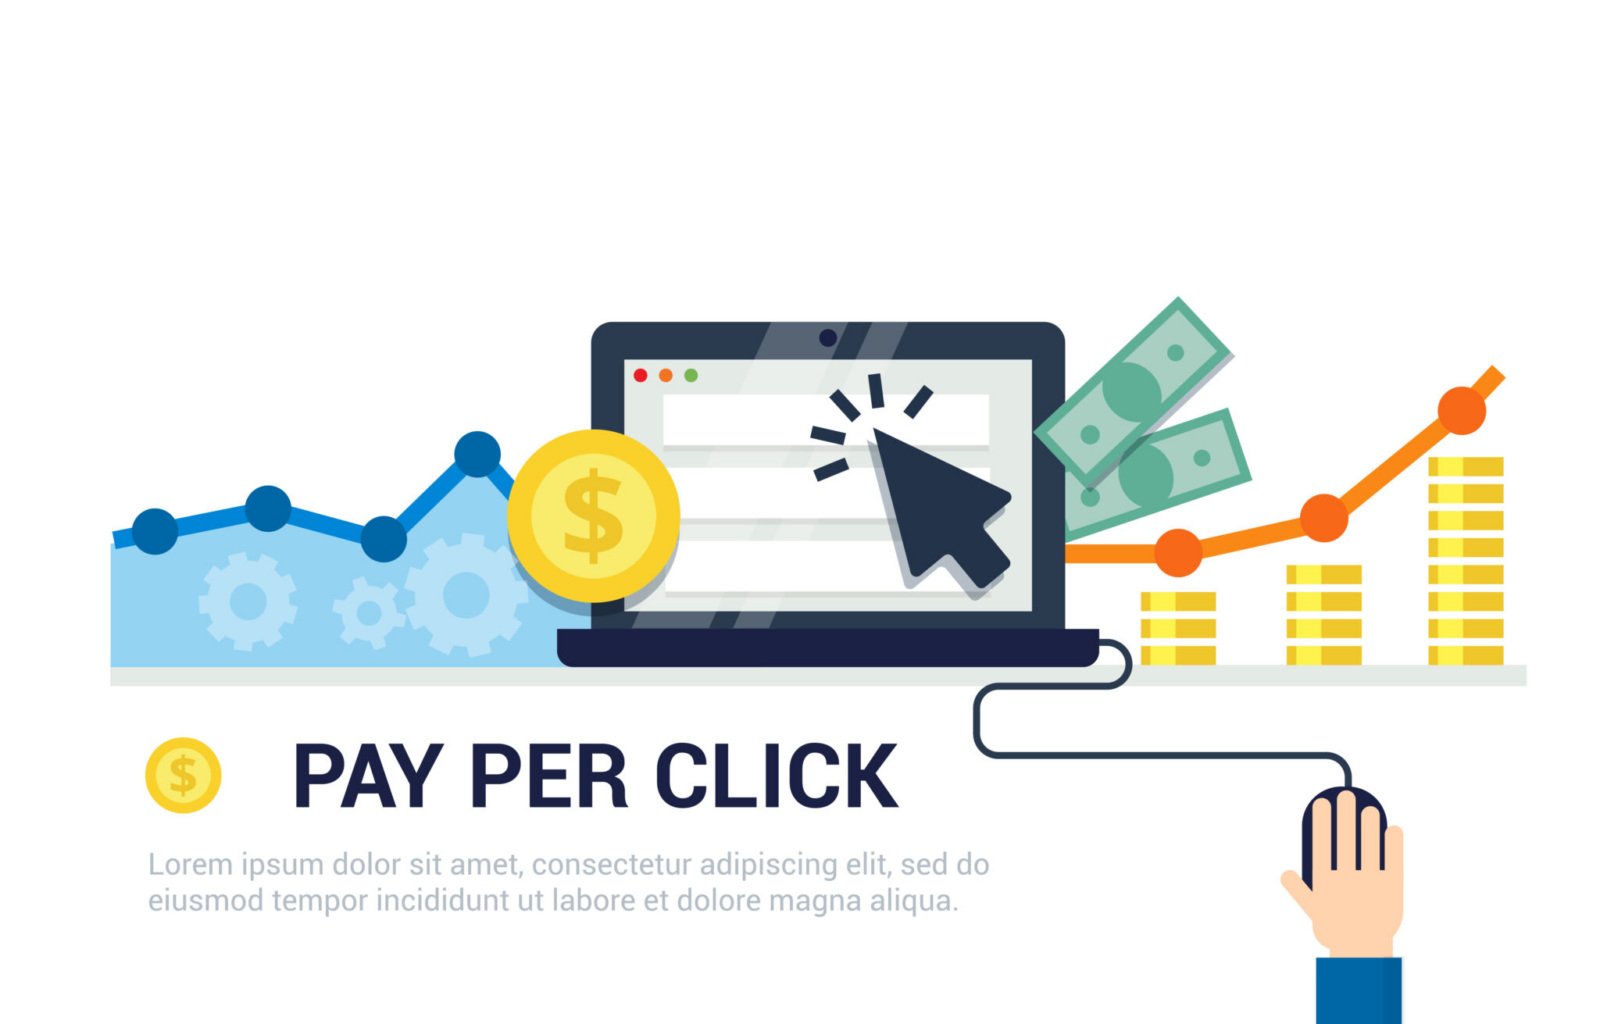 Pay per click image